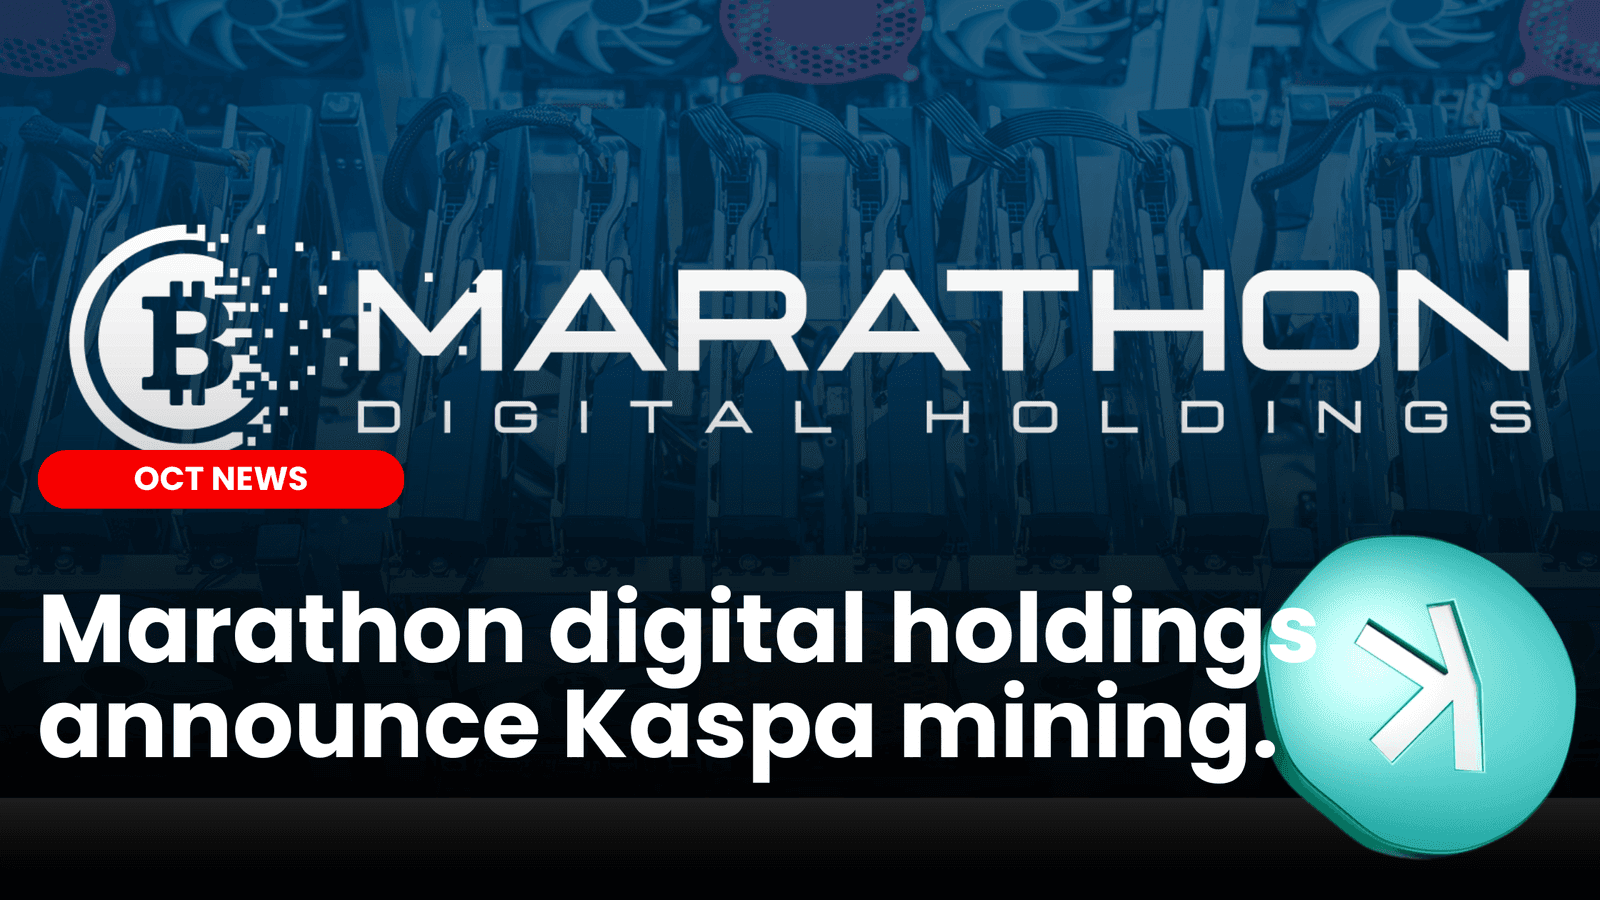 Marathon digital holdings diversify with Kaspa image